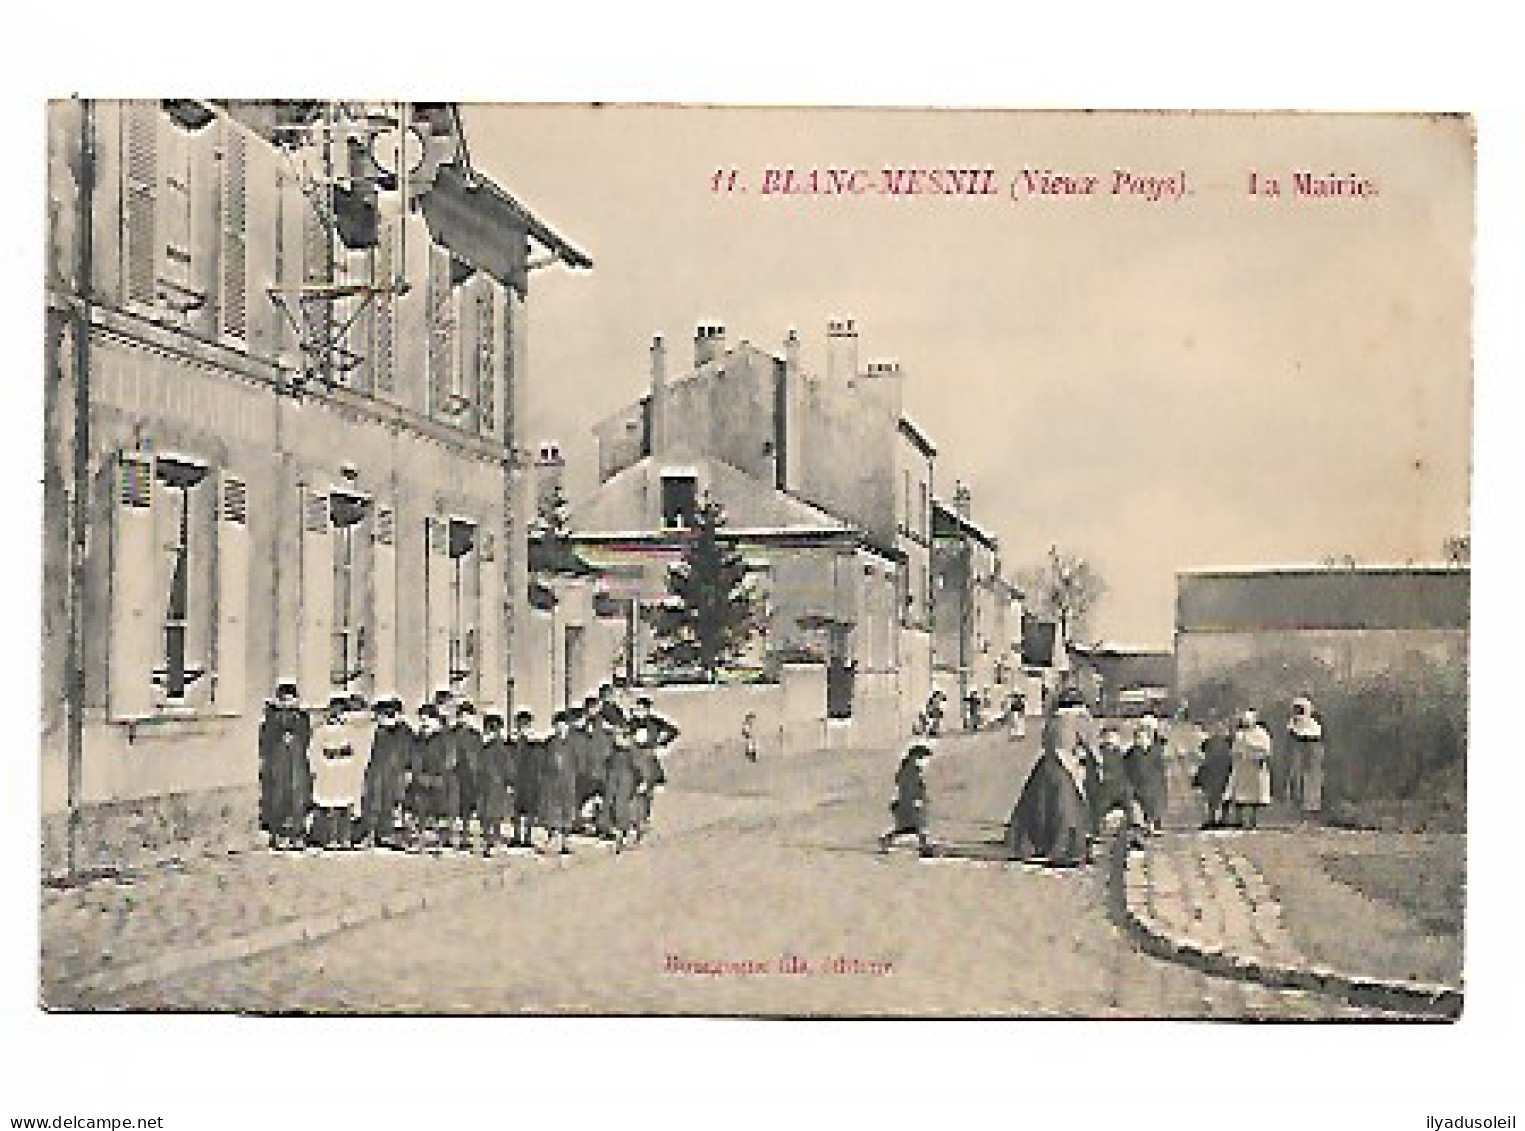 Le Blanc Mesnil La Mairie - Le Blanc-Mesnil